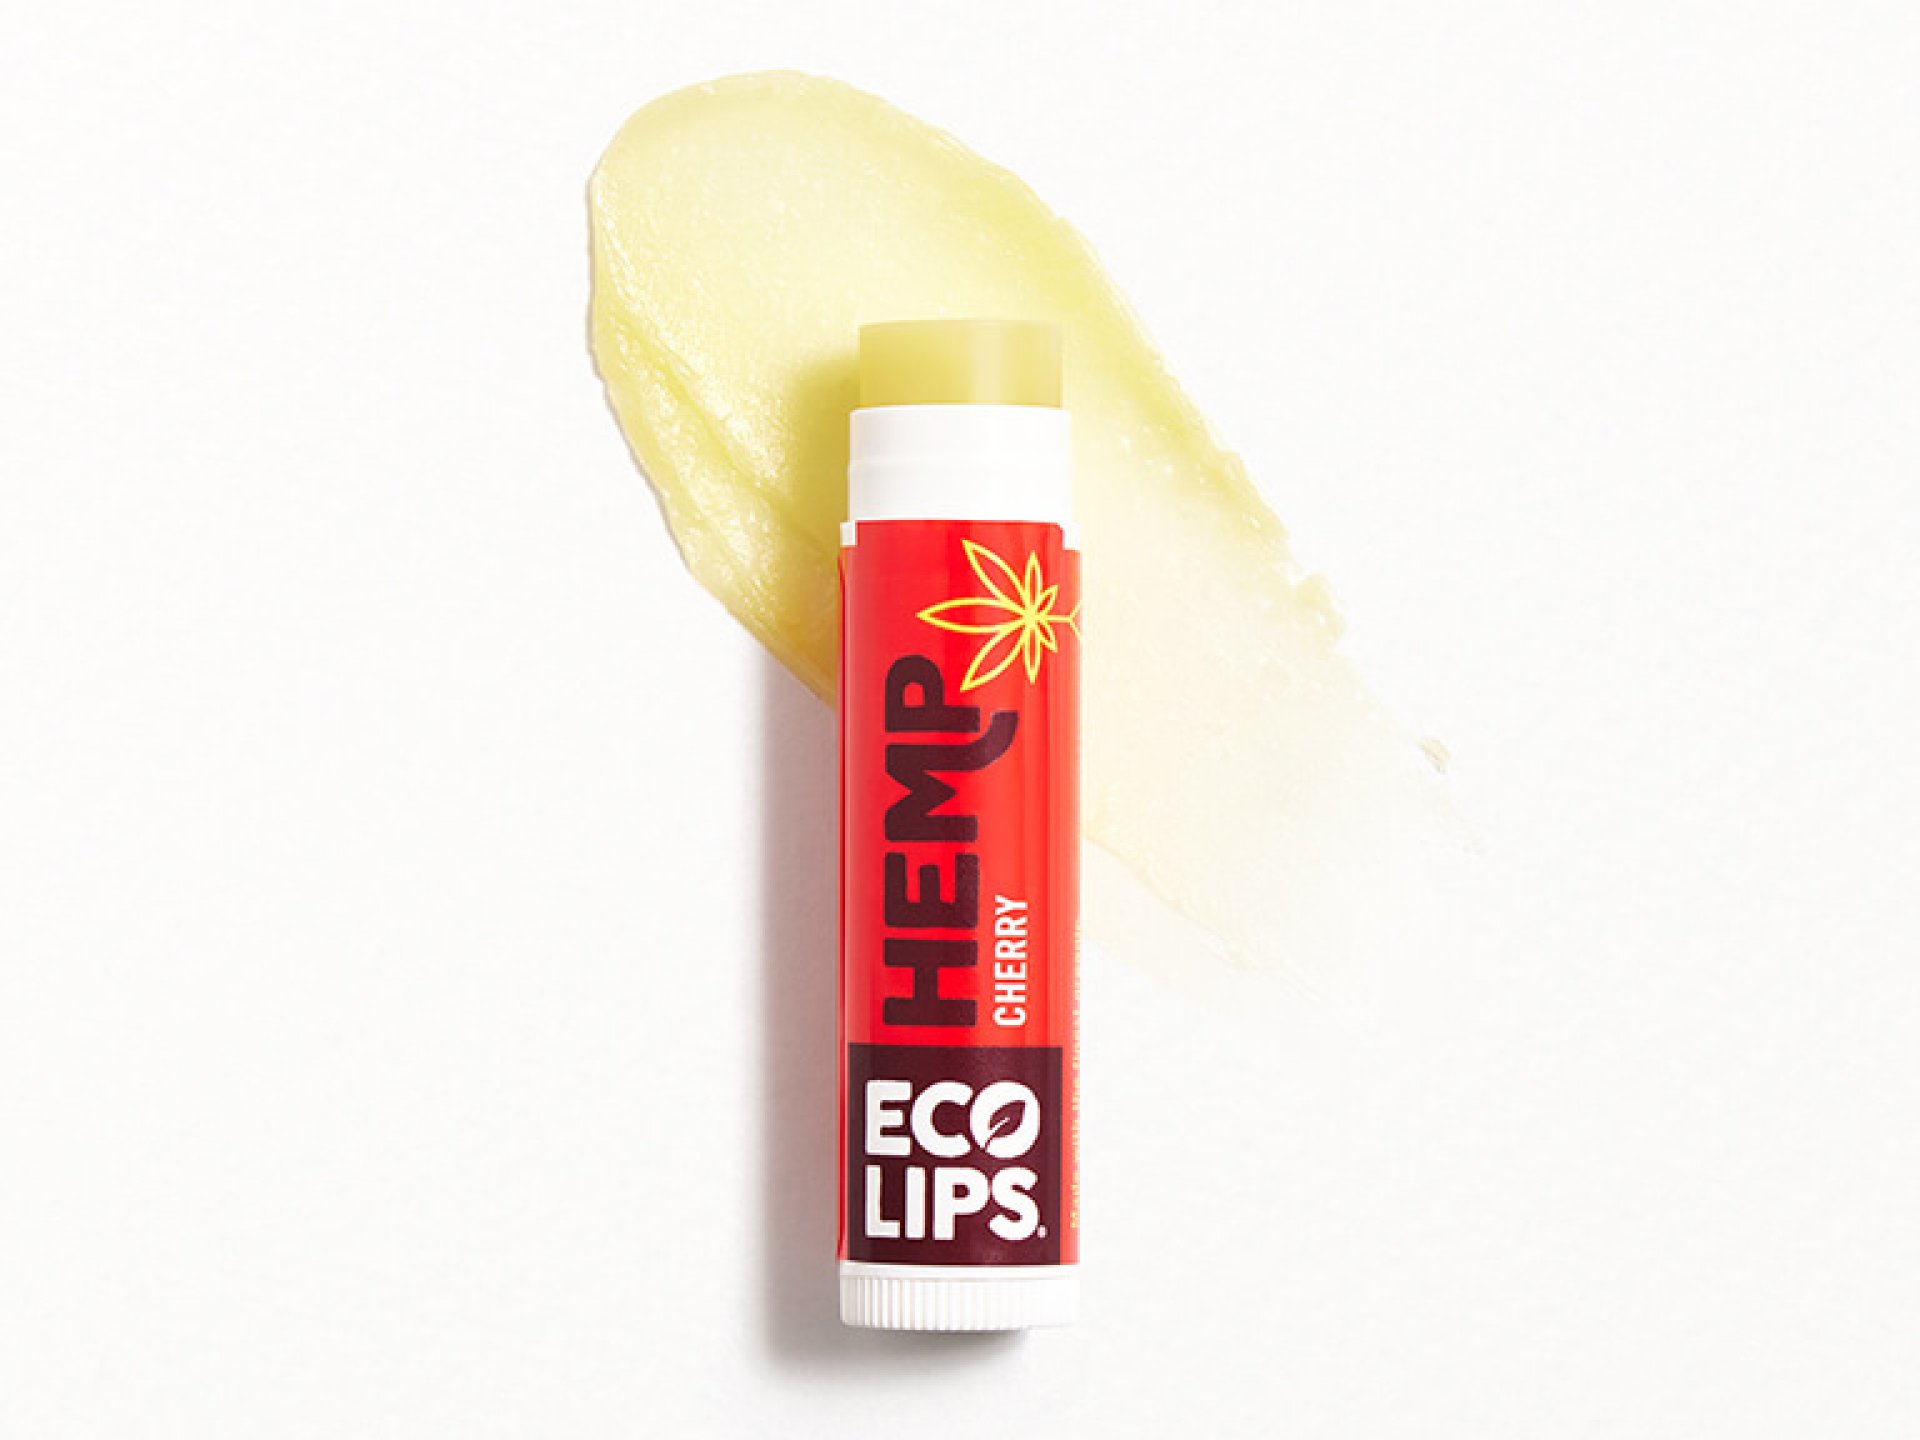 ECO LIPS Hemp Cherry Lip Balm